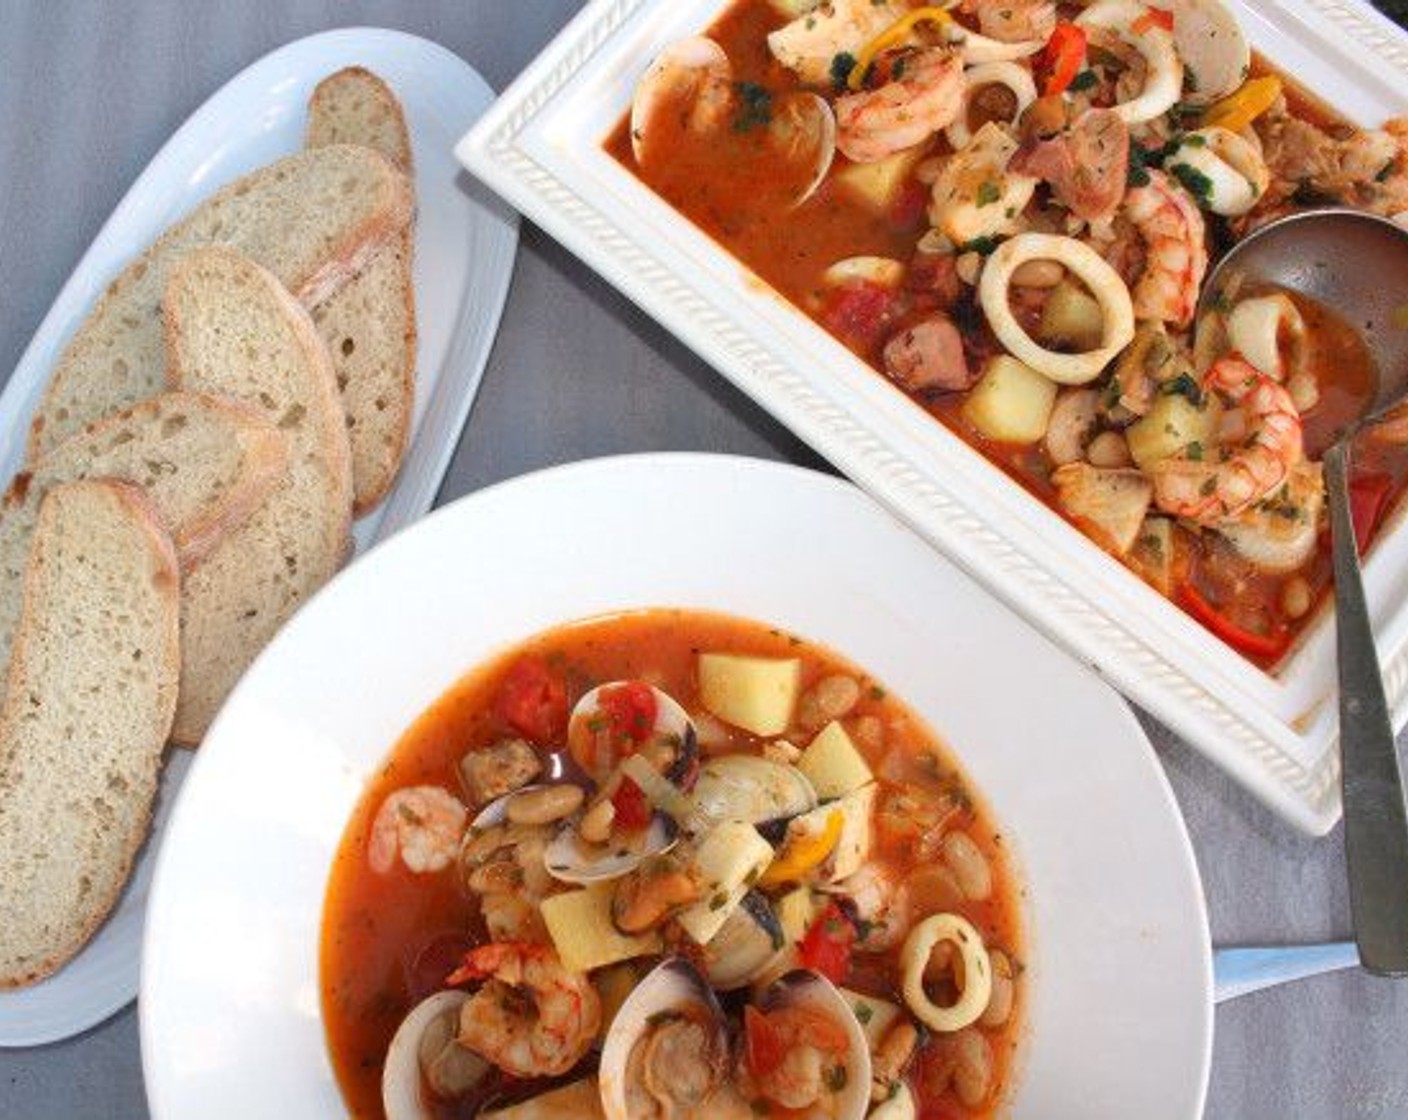 Mediterranean Seafood Stew